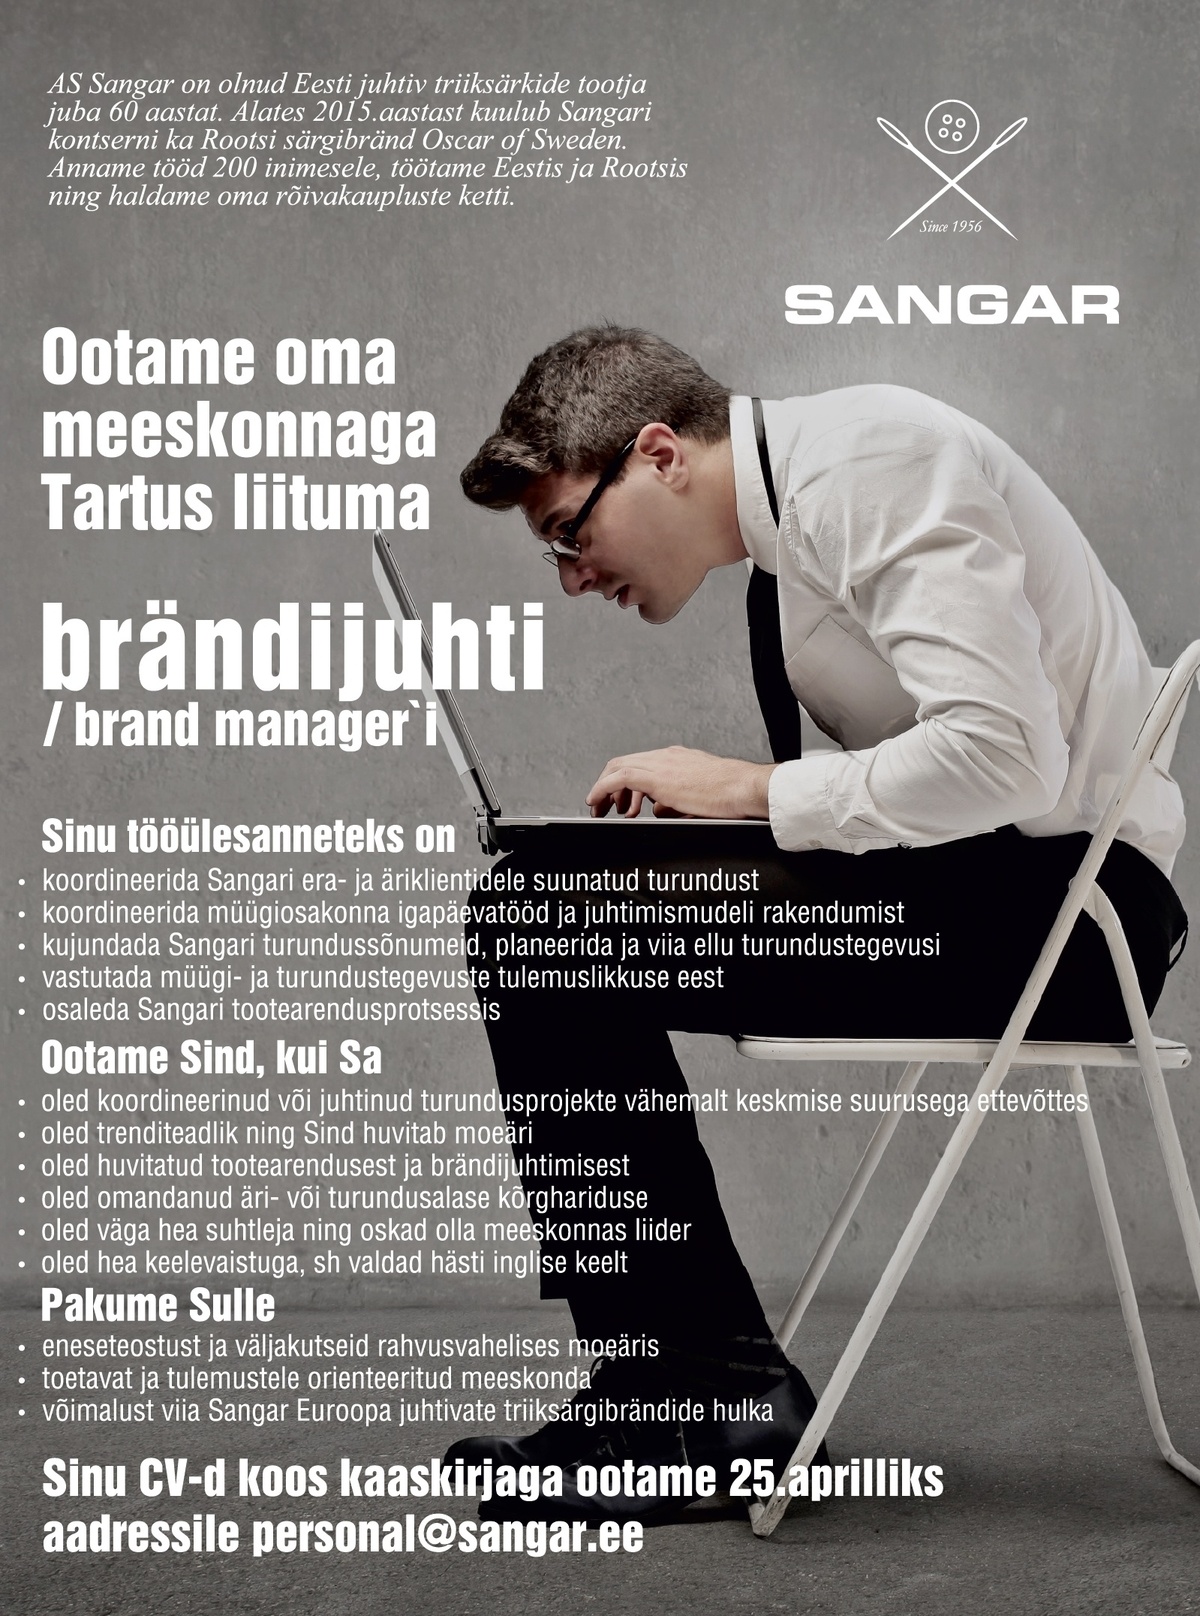 Sangar AS Brändijuht/Brand Manager